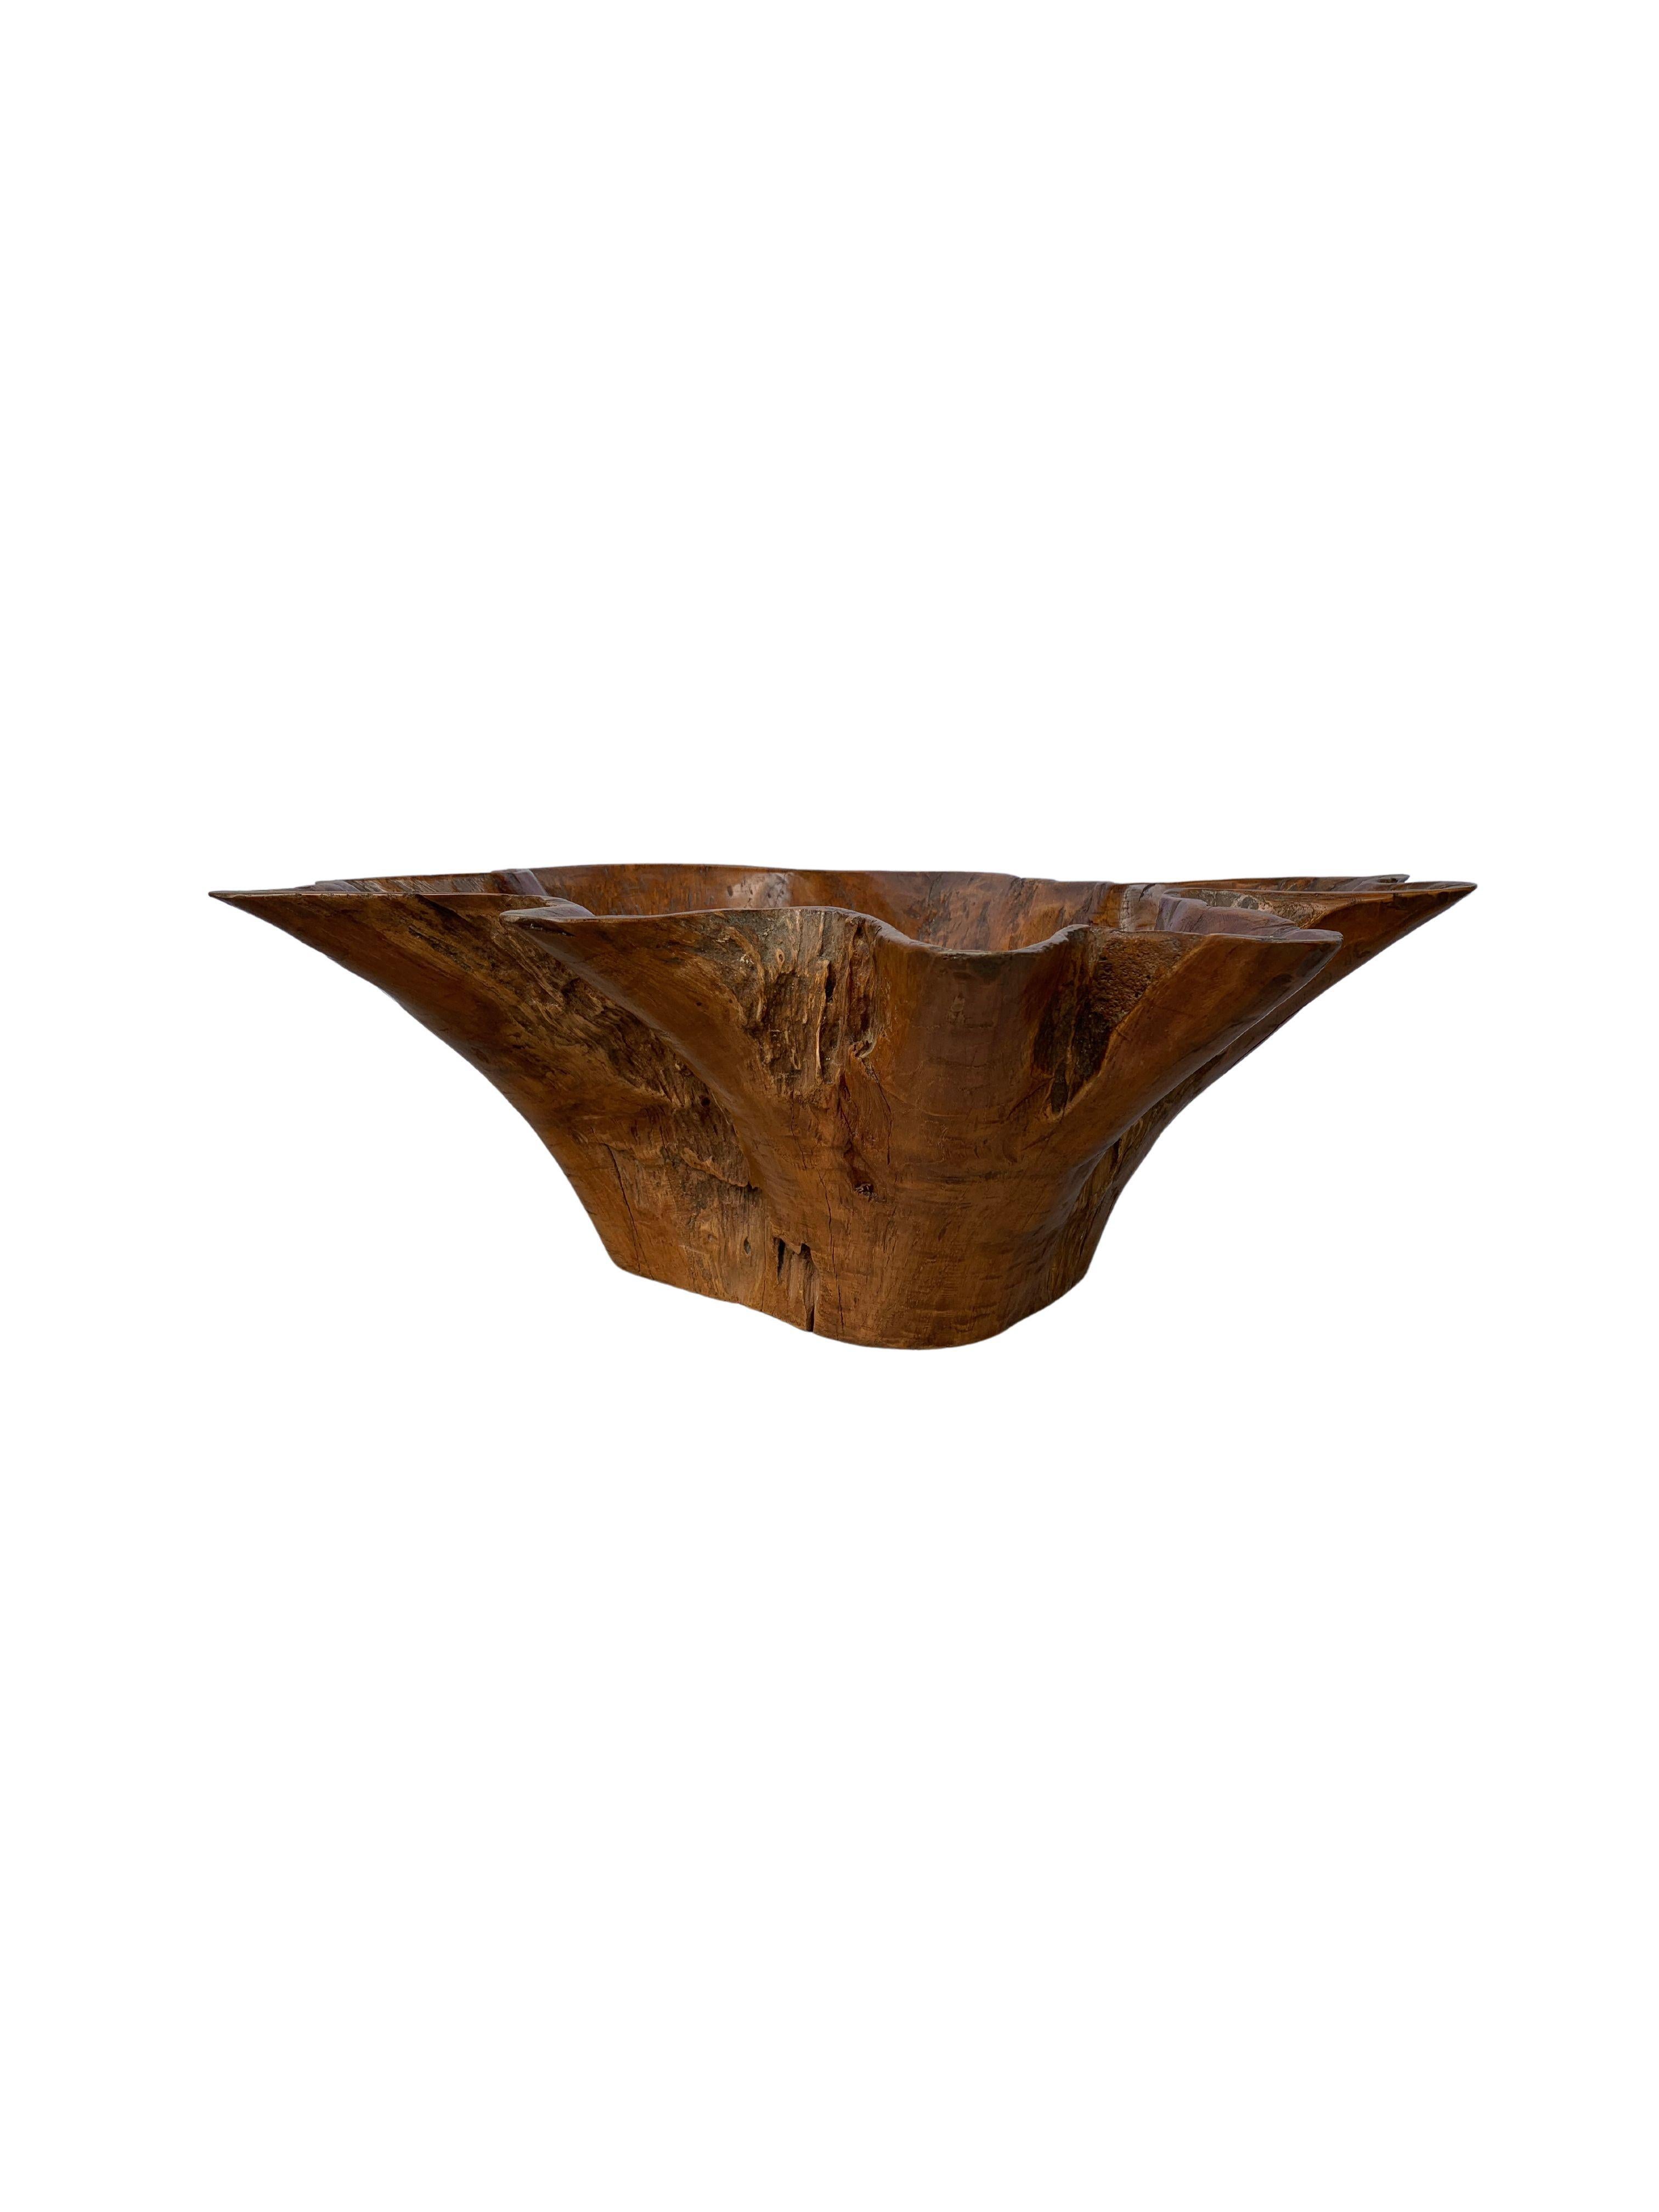 Carved Sculptural Teak Wood Bowl from Java, Indonesia, c. 1980